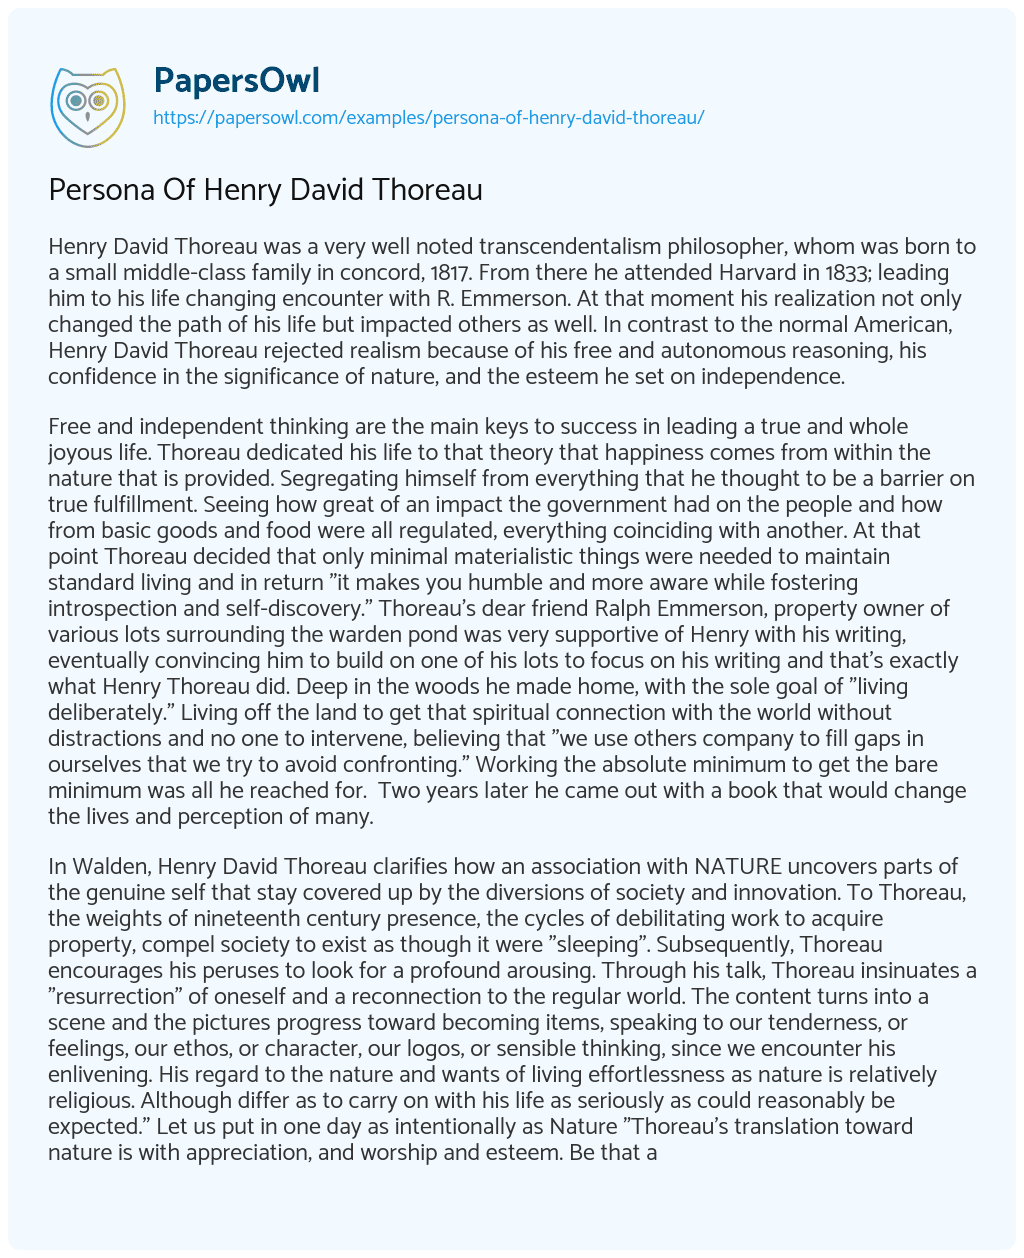 Essay on Persona of Henry David Thoreau